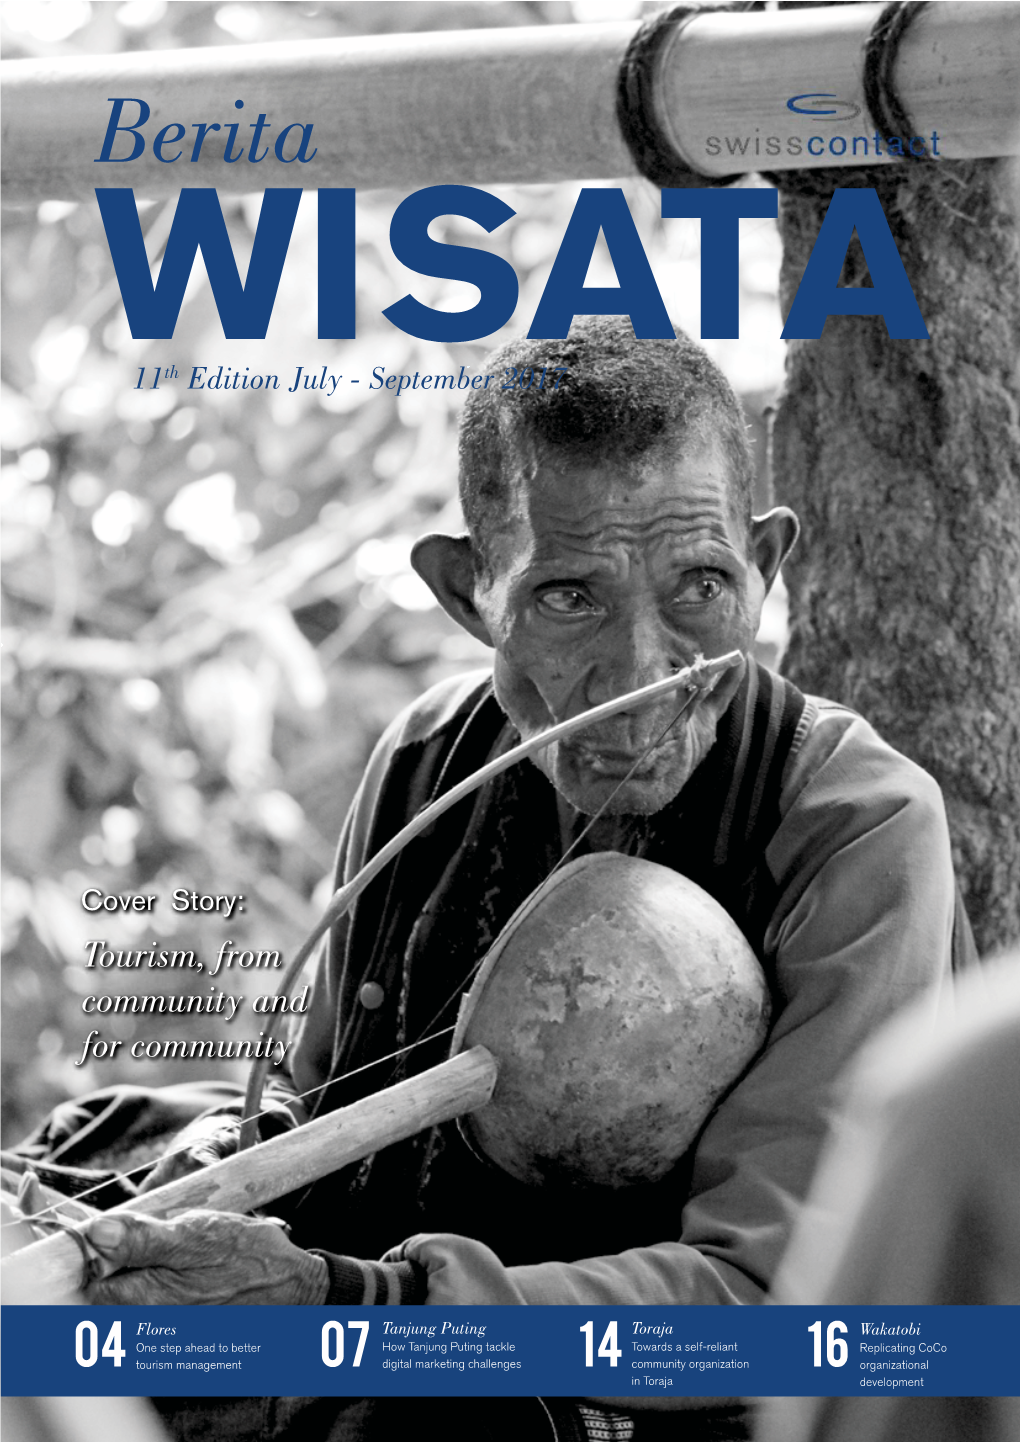 Berita WISATA 11Th Edition July - September 2017